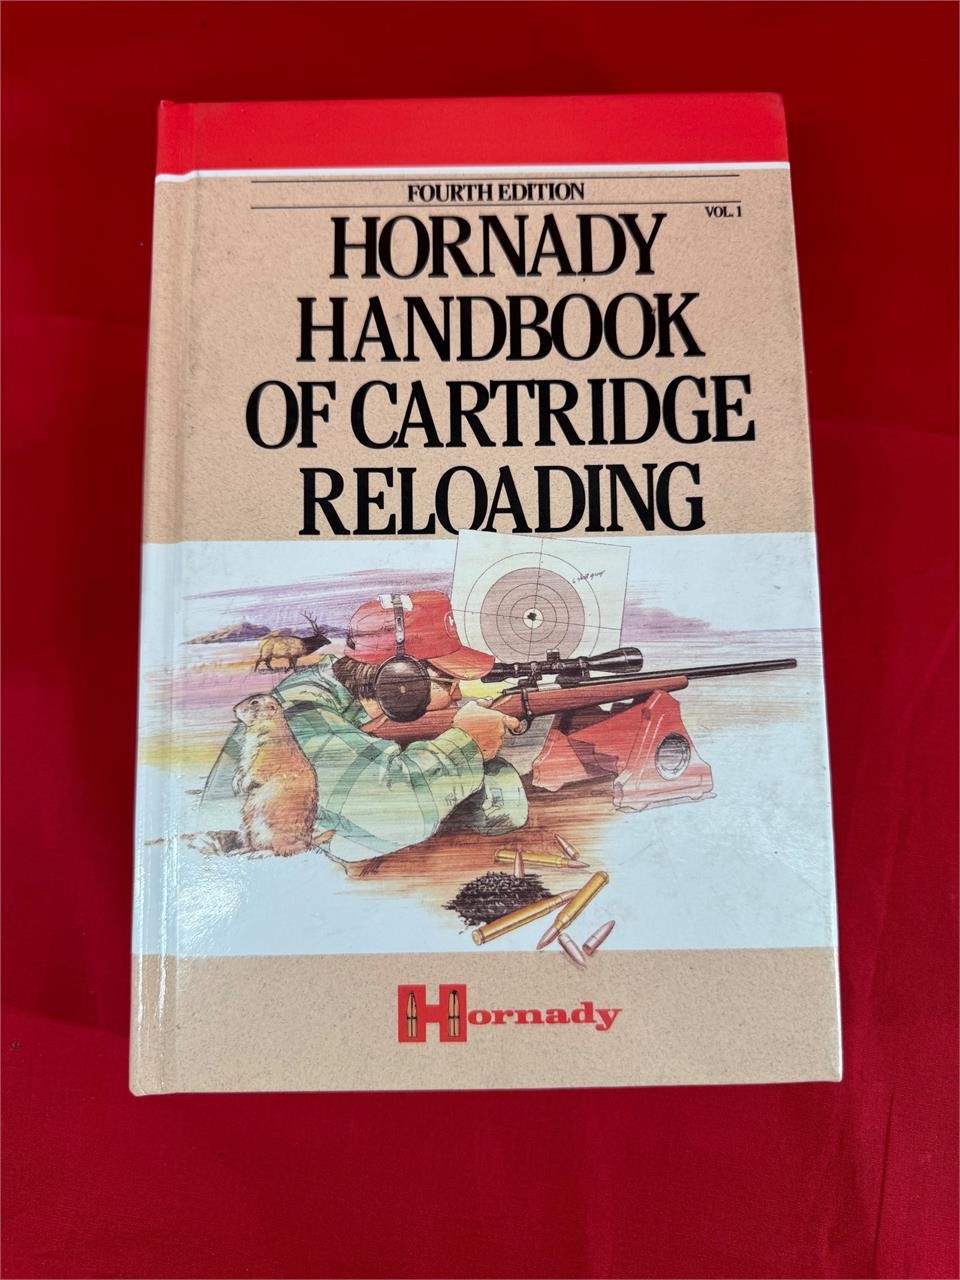 Hornady Handbook of Cartridge Reloading Vol. 1